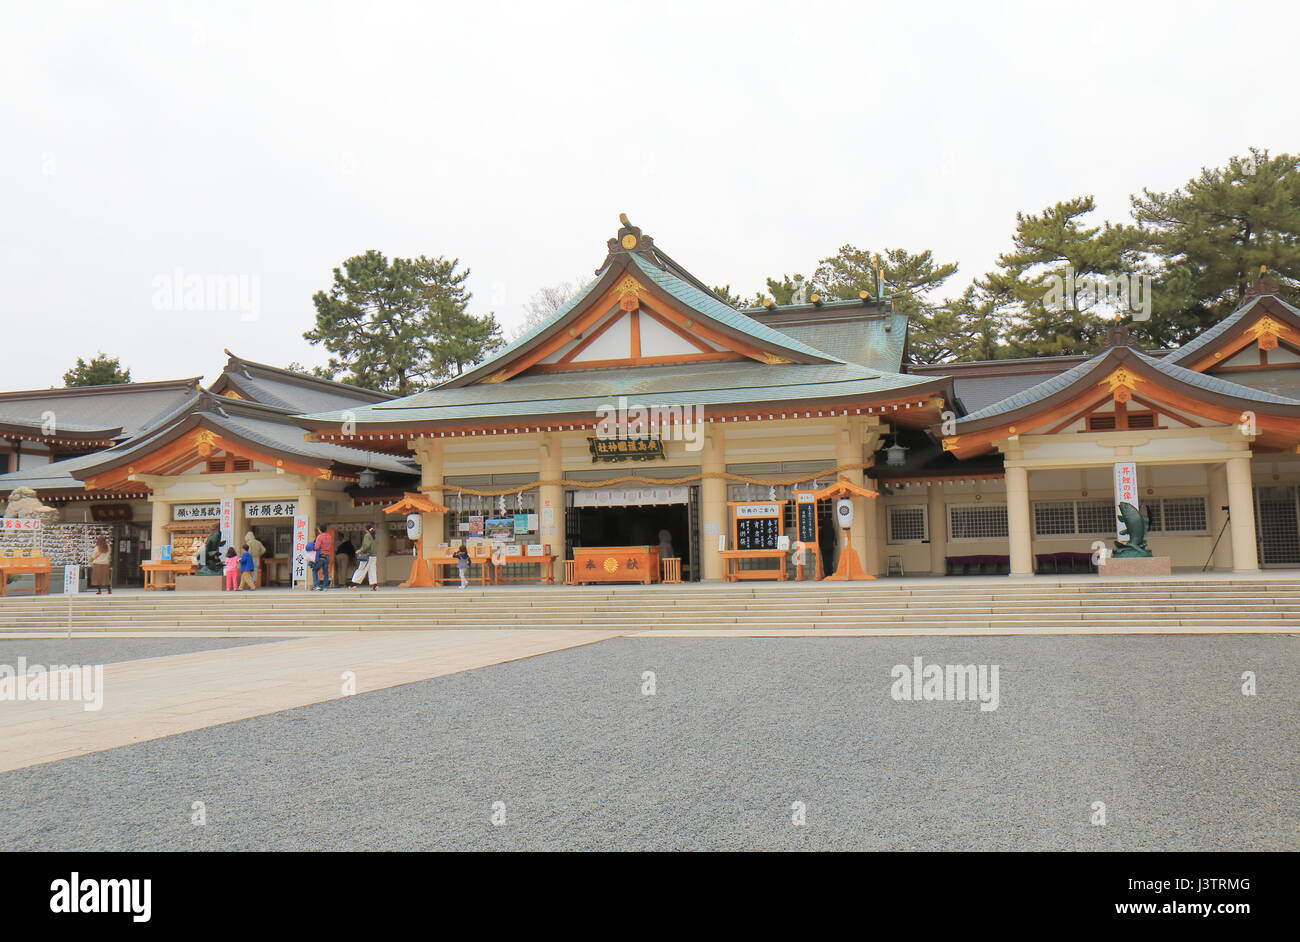 La gente visita Gokoku santuario in Hiroshima, Giappone. Hiroshima Gokoku santuario è stato istituito per piangere la Hiroshima Han vittime della guerra Boshin. Foto Stock